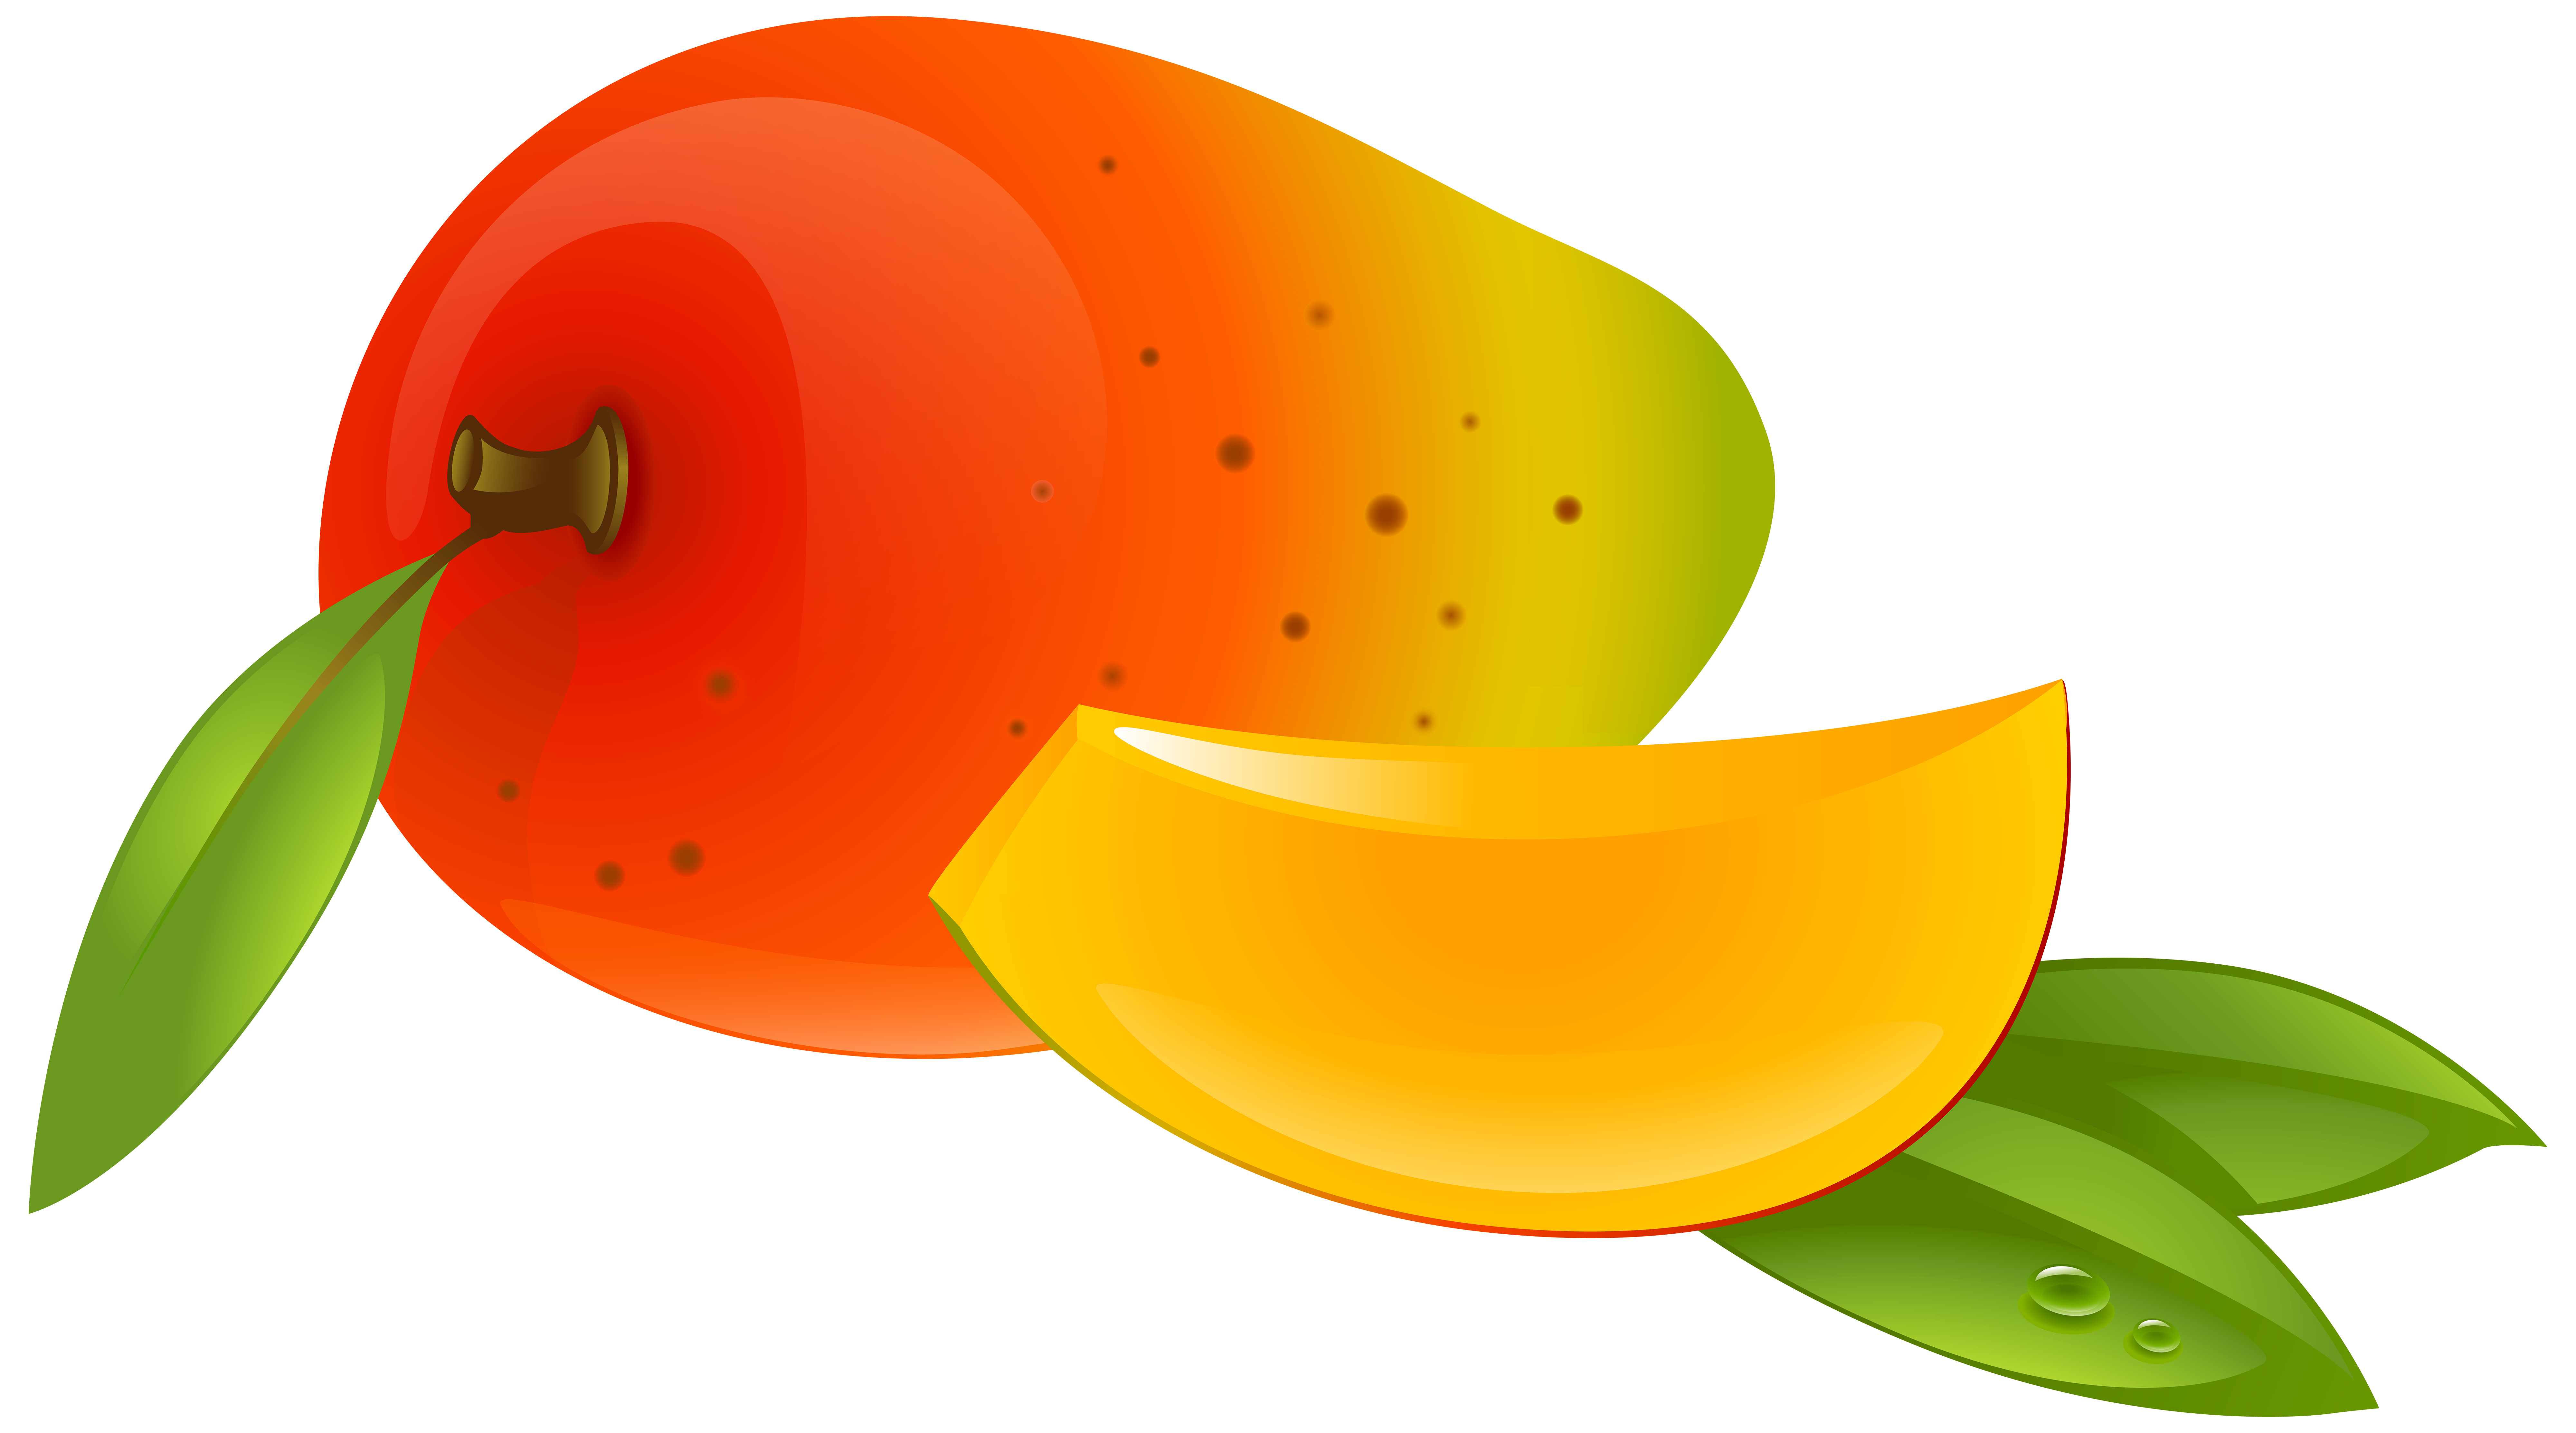 icecream clipart mango